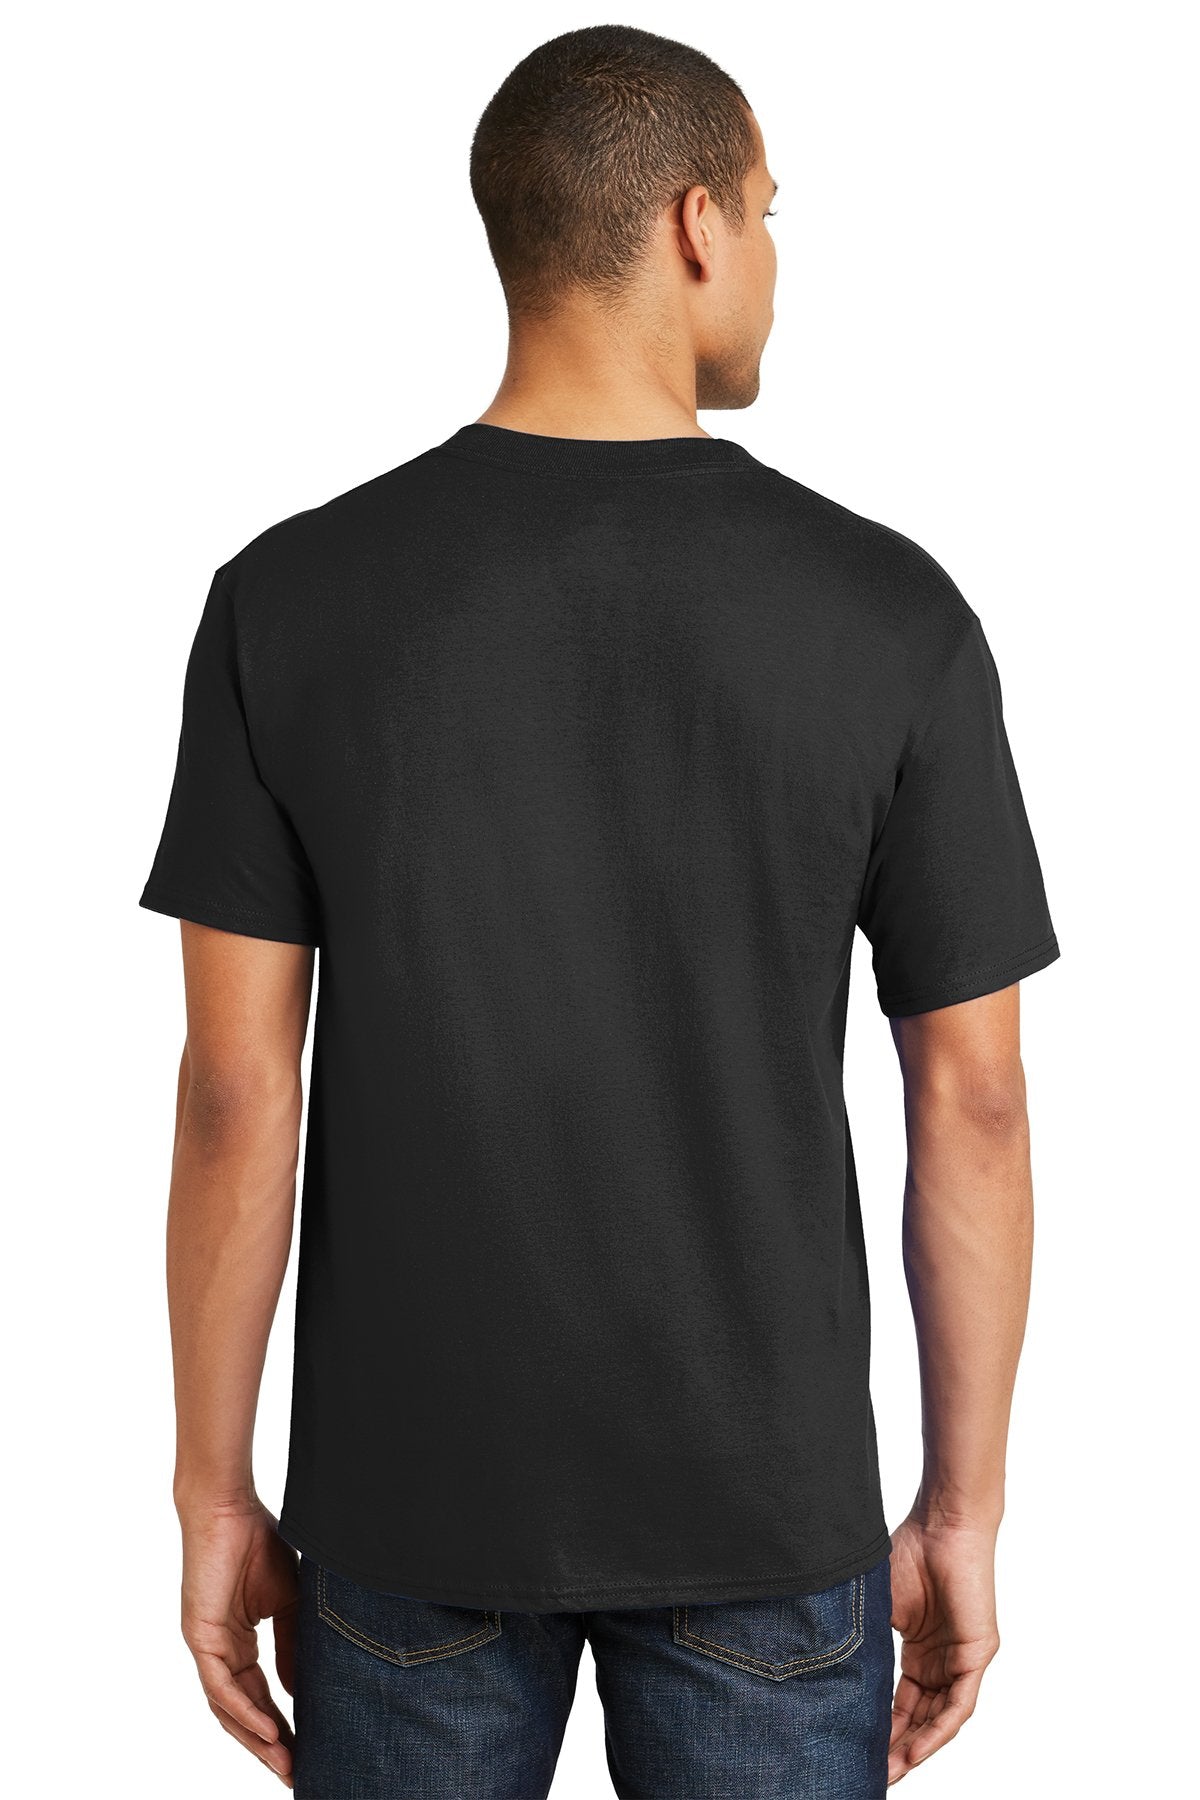 hanes beefy cotton t shirt 5180 black